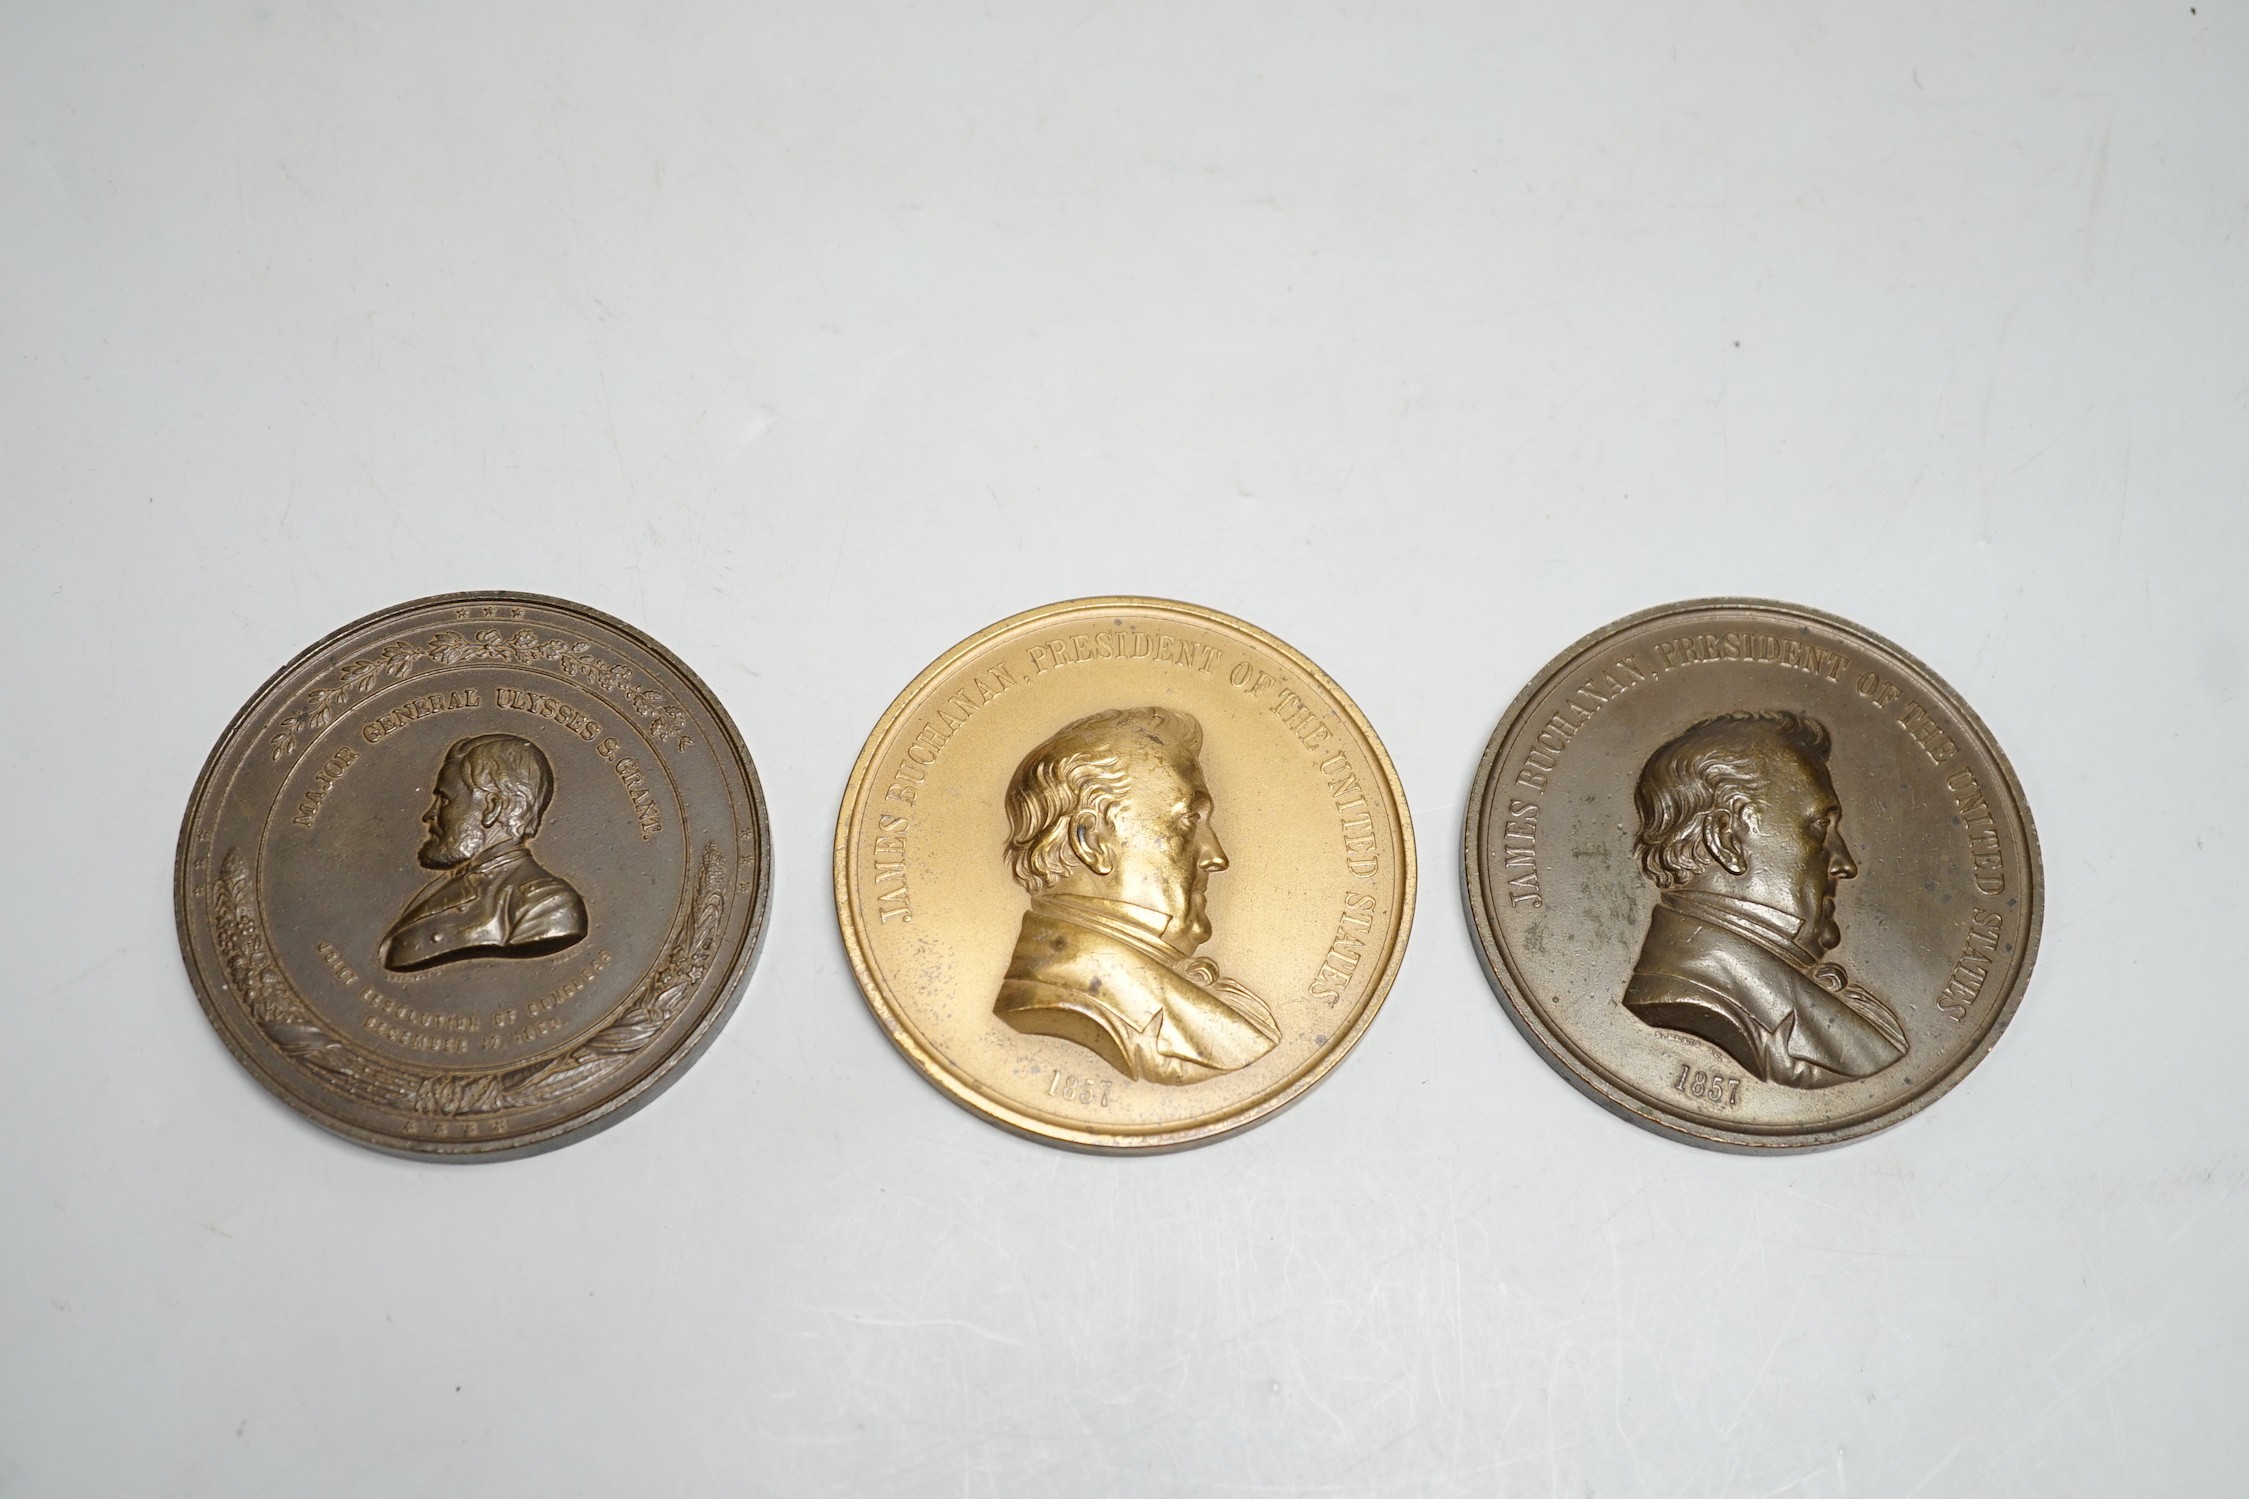 USA commemorative medals – Two James Buchanan, Indian Peace bronze medals 1857, ‘1863’ Major General Ulysses S. Grant medal, restrike